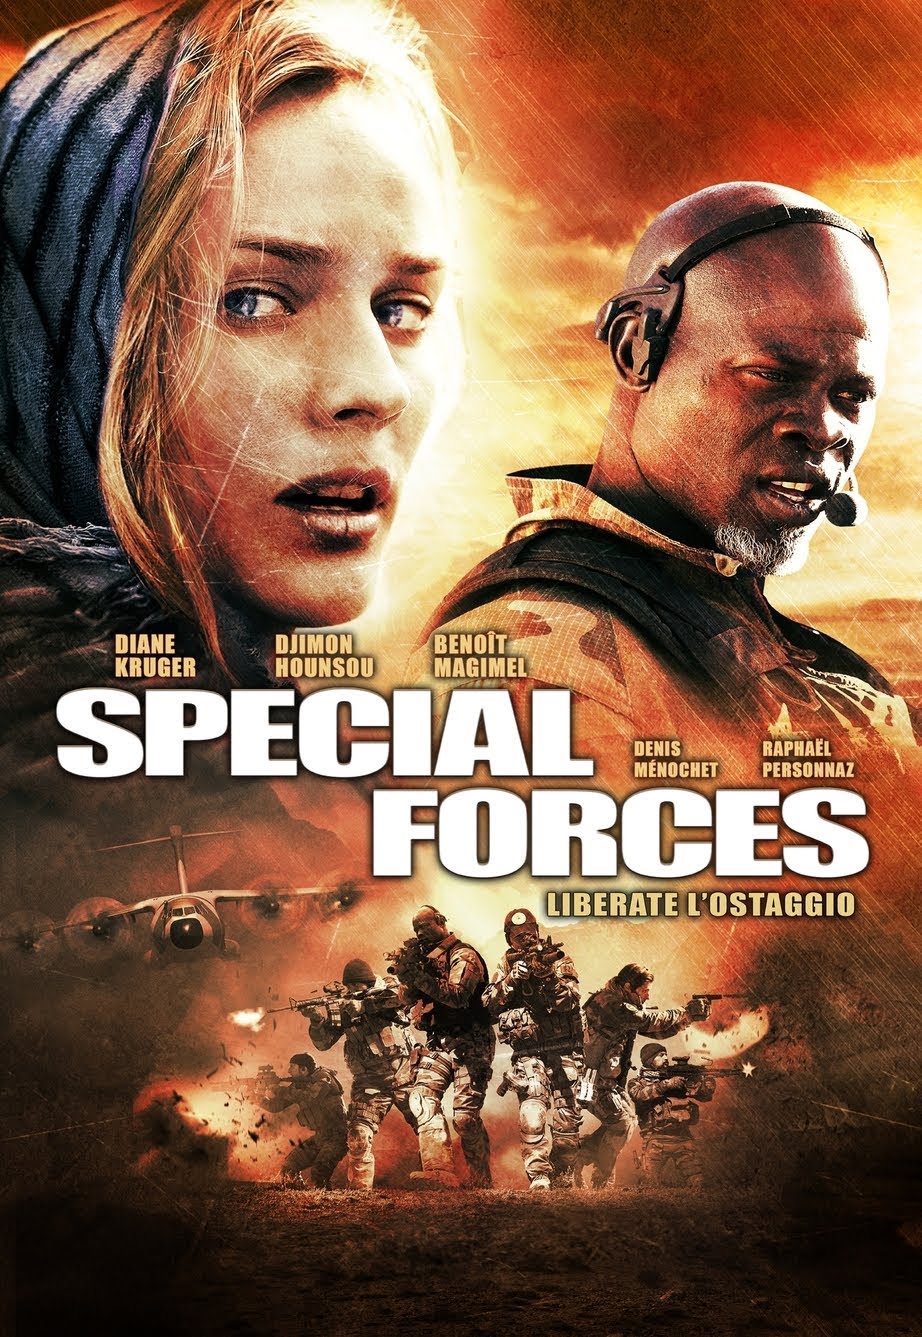 Special Forces – Liberate l’ostaggio [HD] (2012)